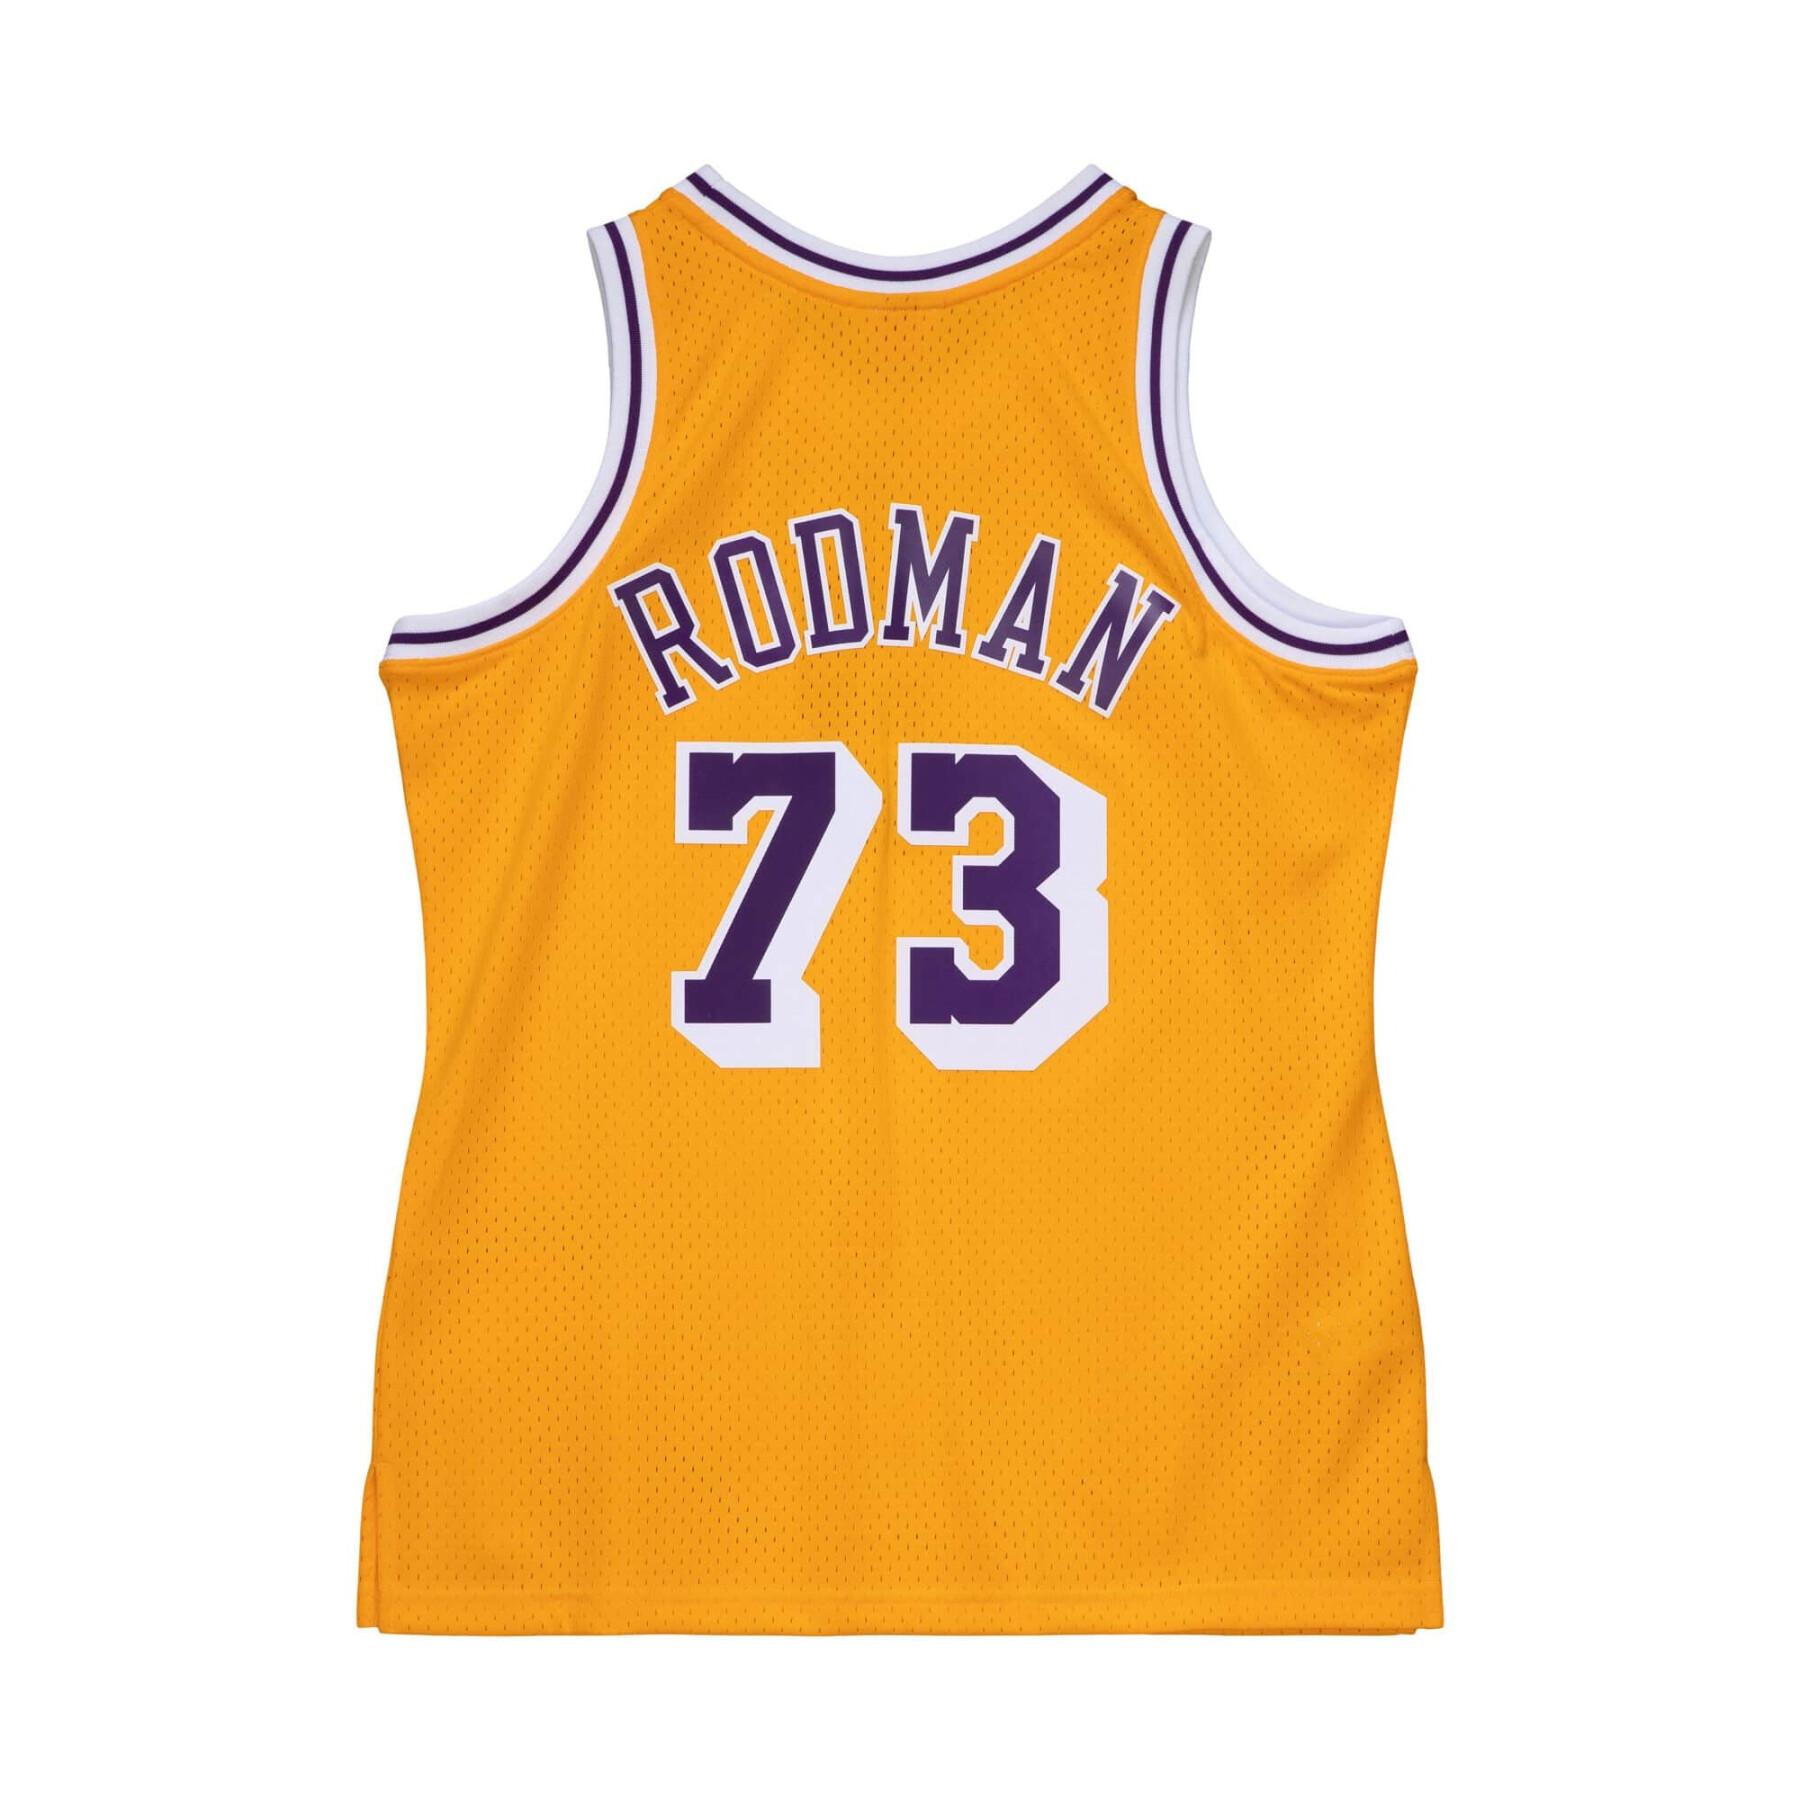 Trikot Los Angeles Lakers NBA Swingman 1998 Dennis Rodman